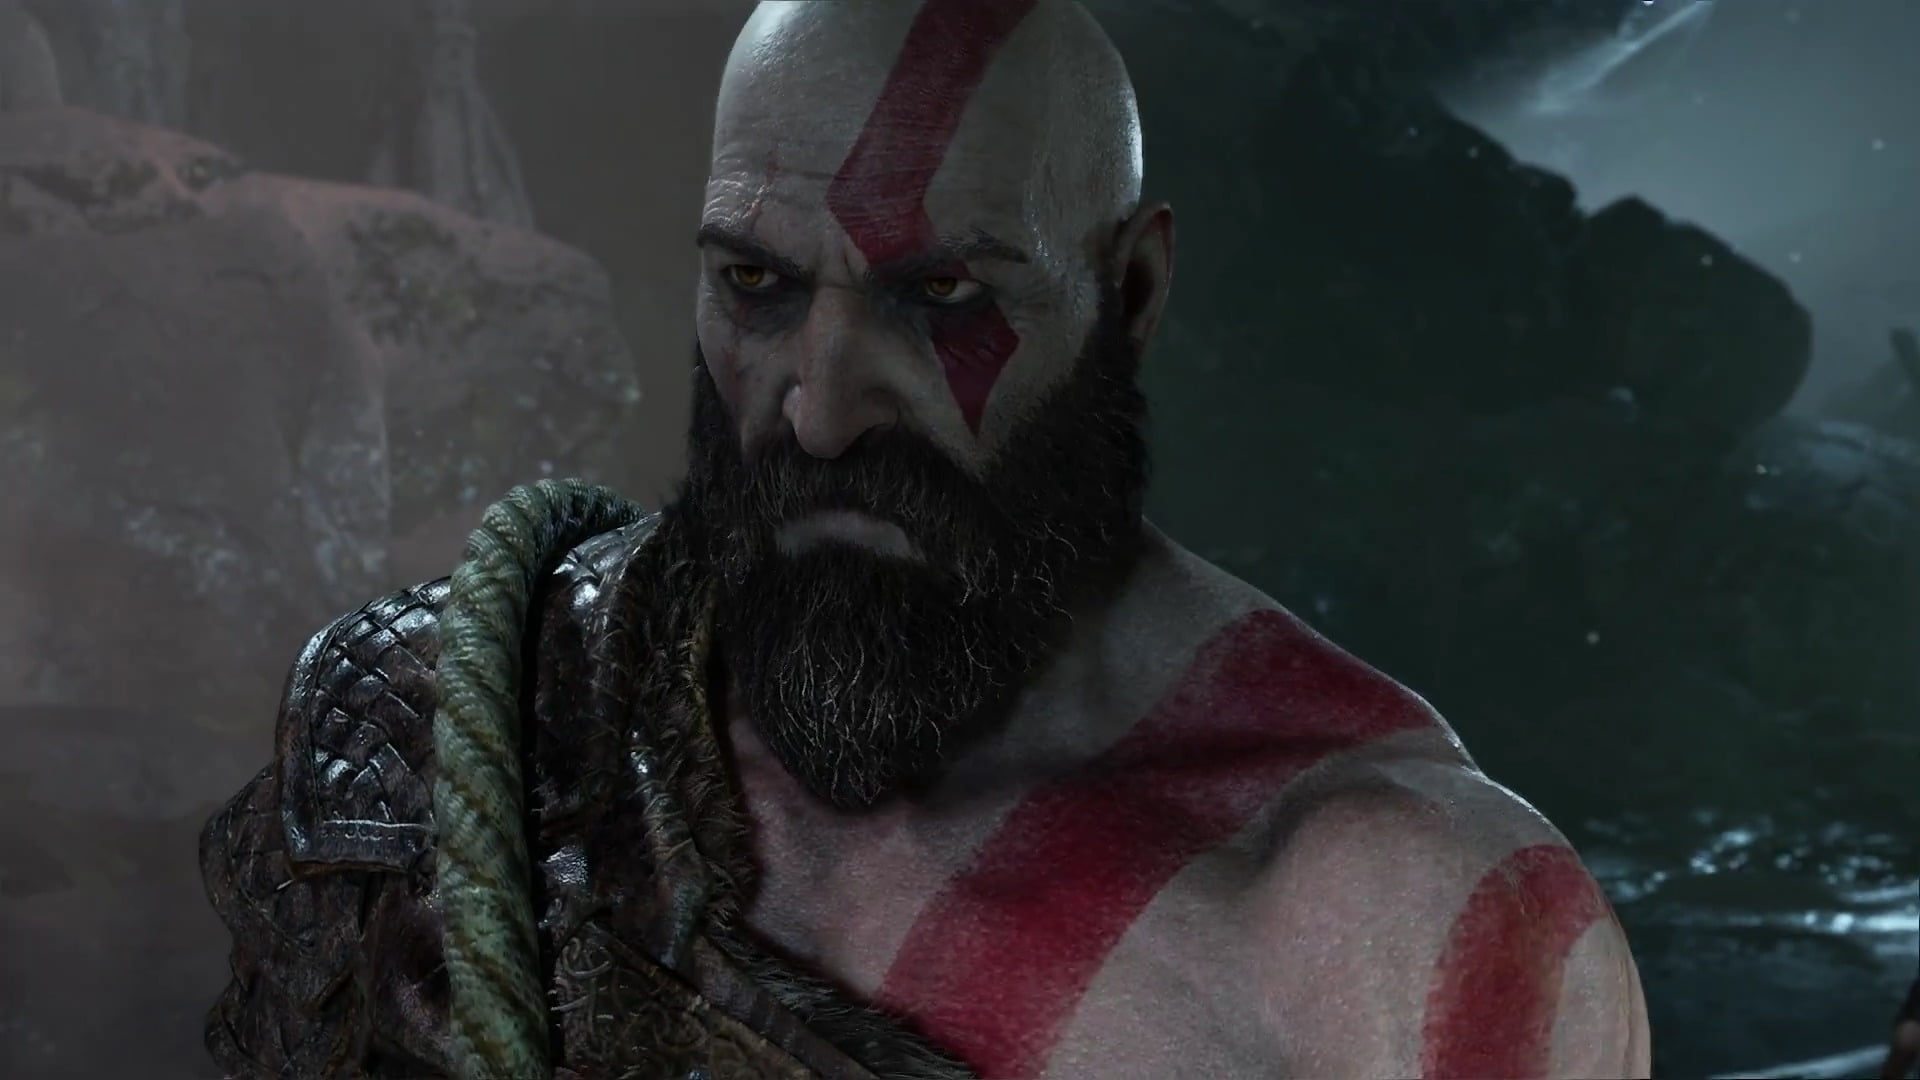 God of War, Kratos, God of War (2018), one person, portrait